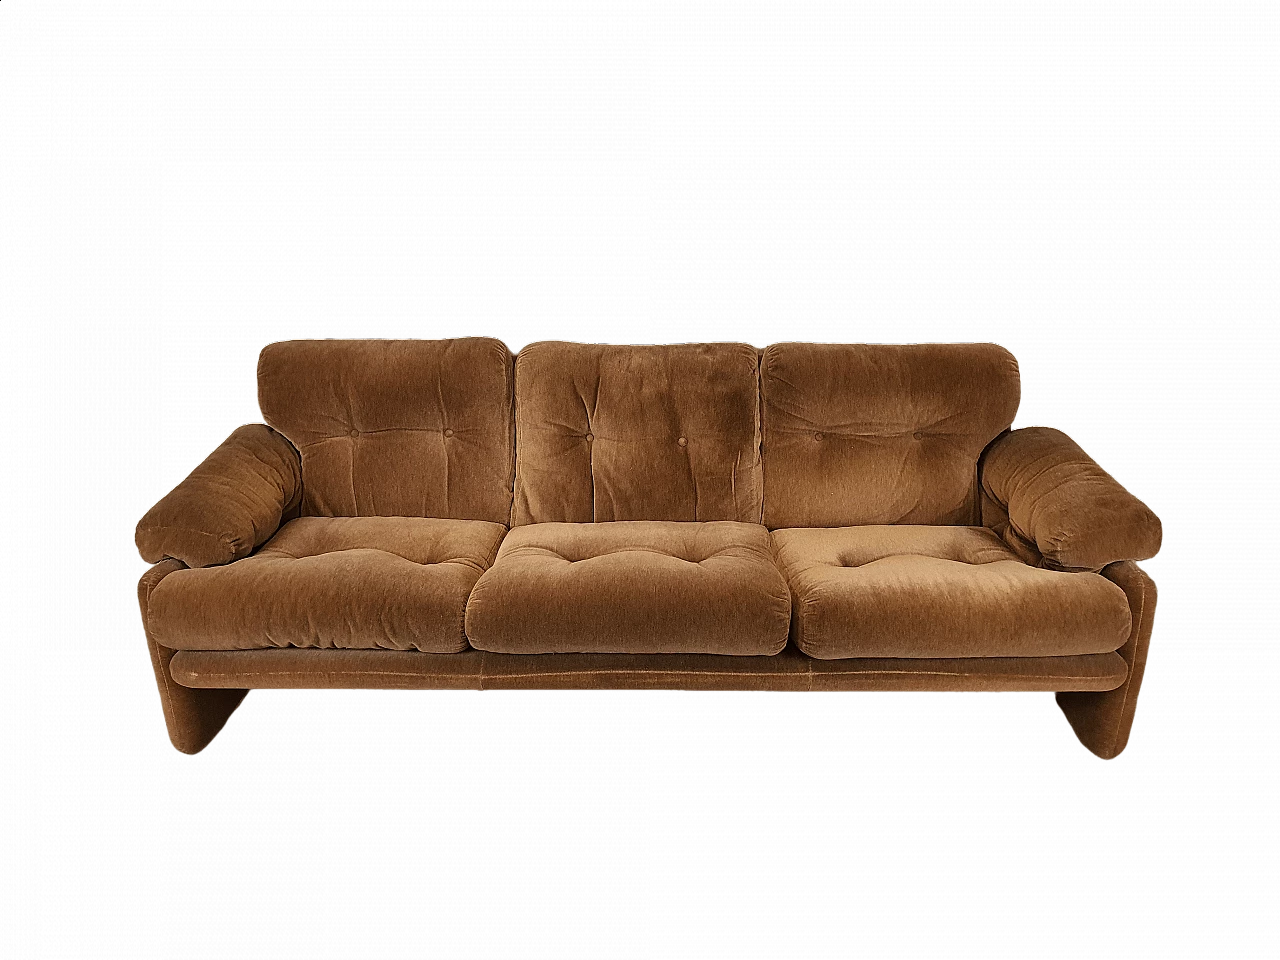 Coronado sofa by Tobia Scarpa for B&B Italia, '60s 52